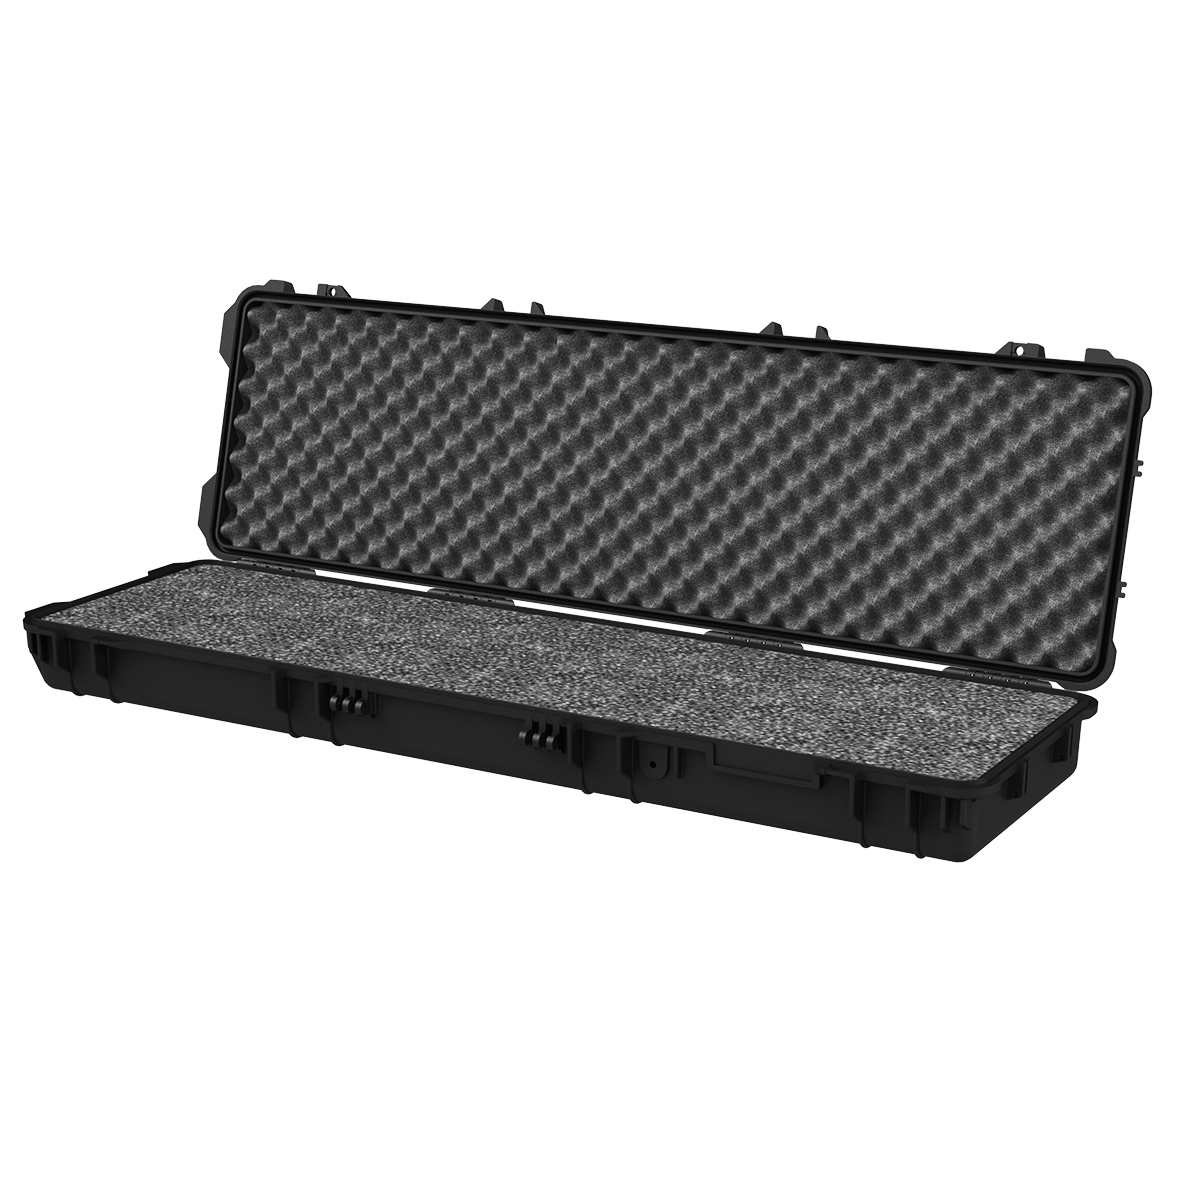 TCH Hardware Replacement foam for Pelican® 1750 case - 3 piece set